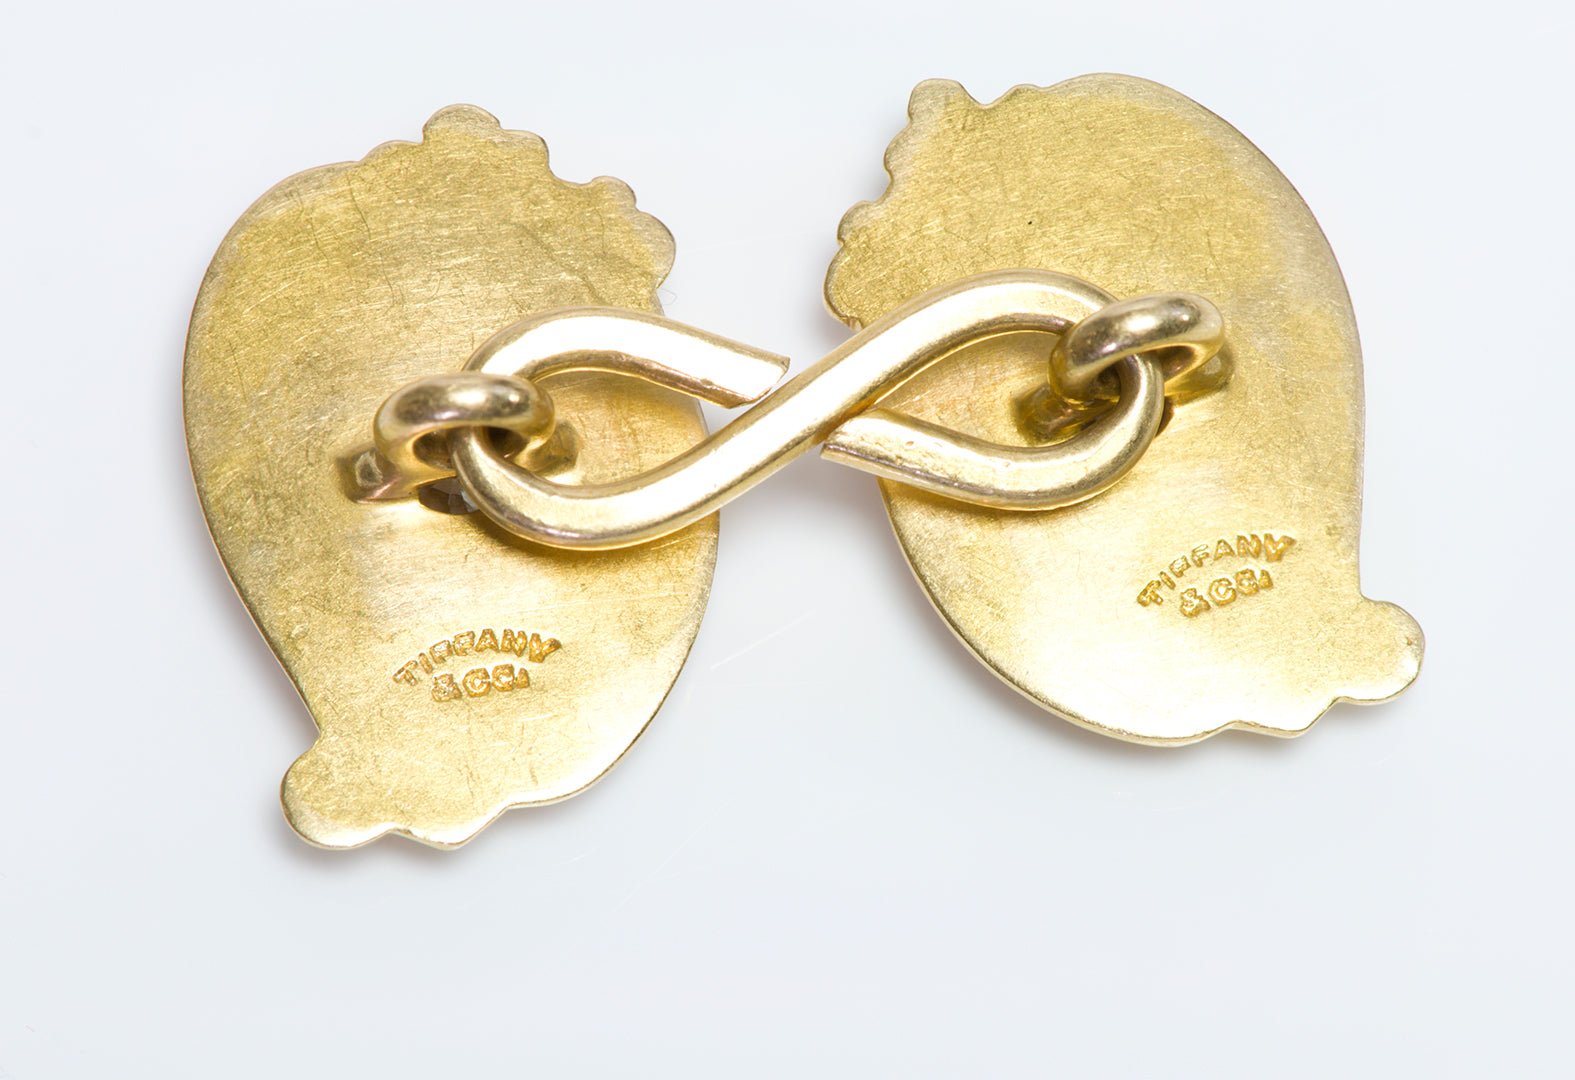 Tiffany & Co. Antique Art Nouveau Gold Diamond Cufflinks